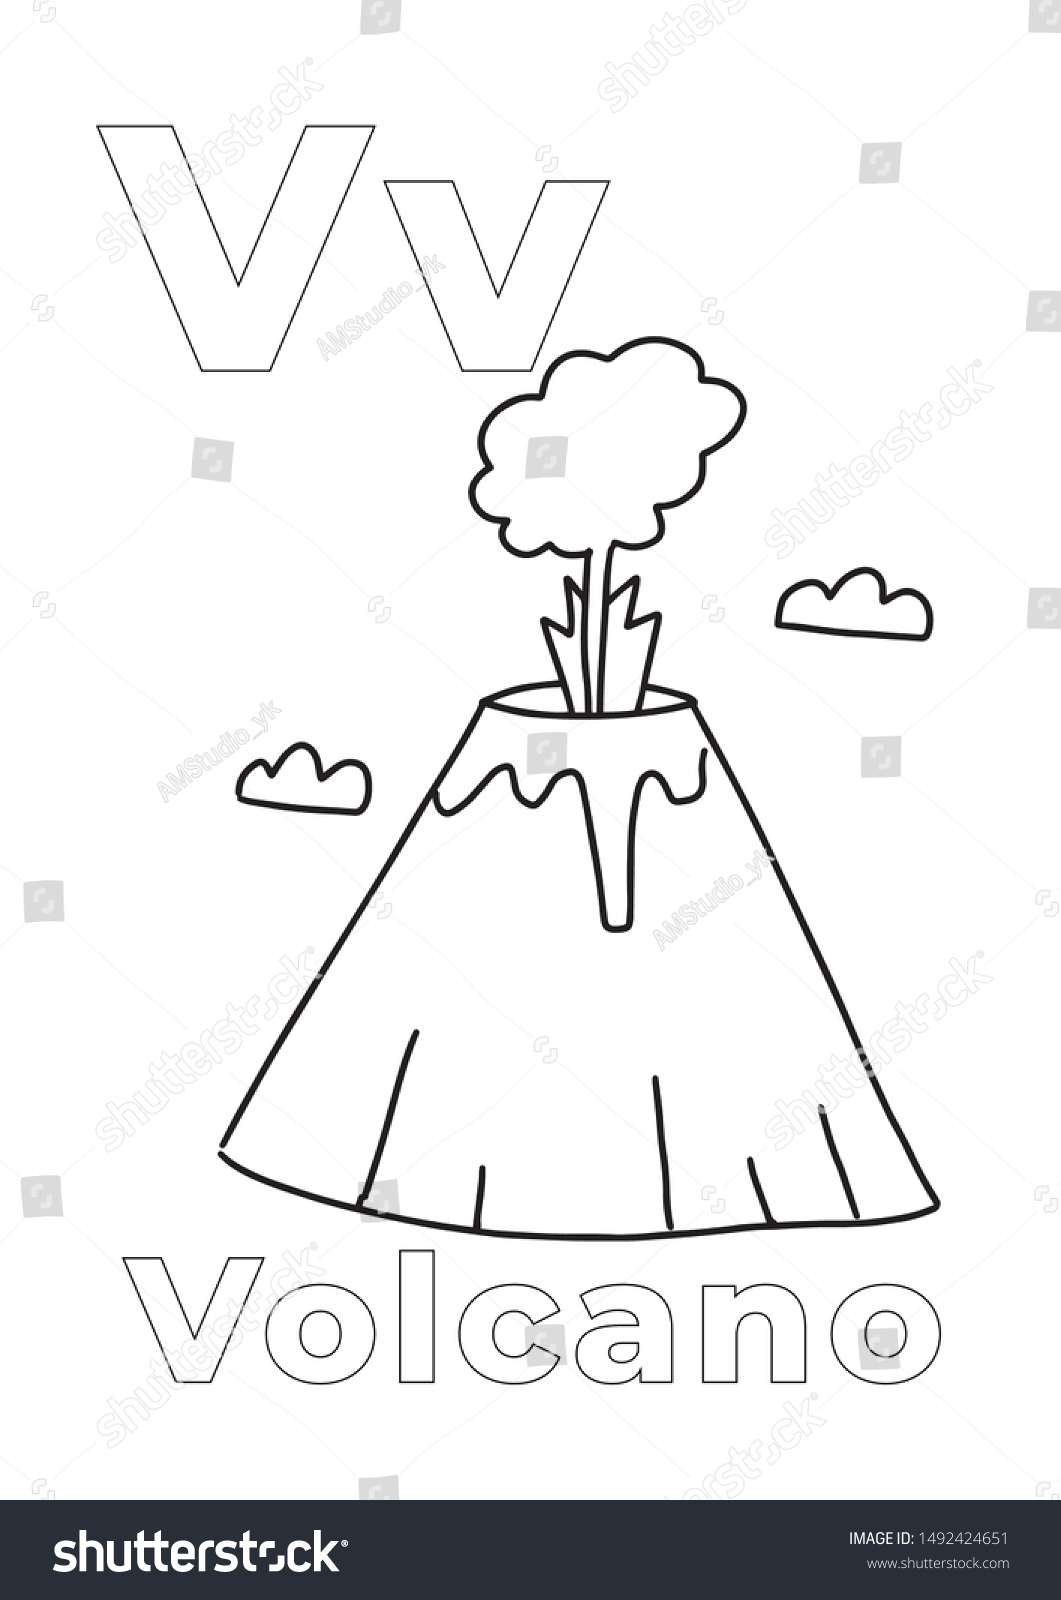 Kid coloring book coloring book volcano stock vector royalty free